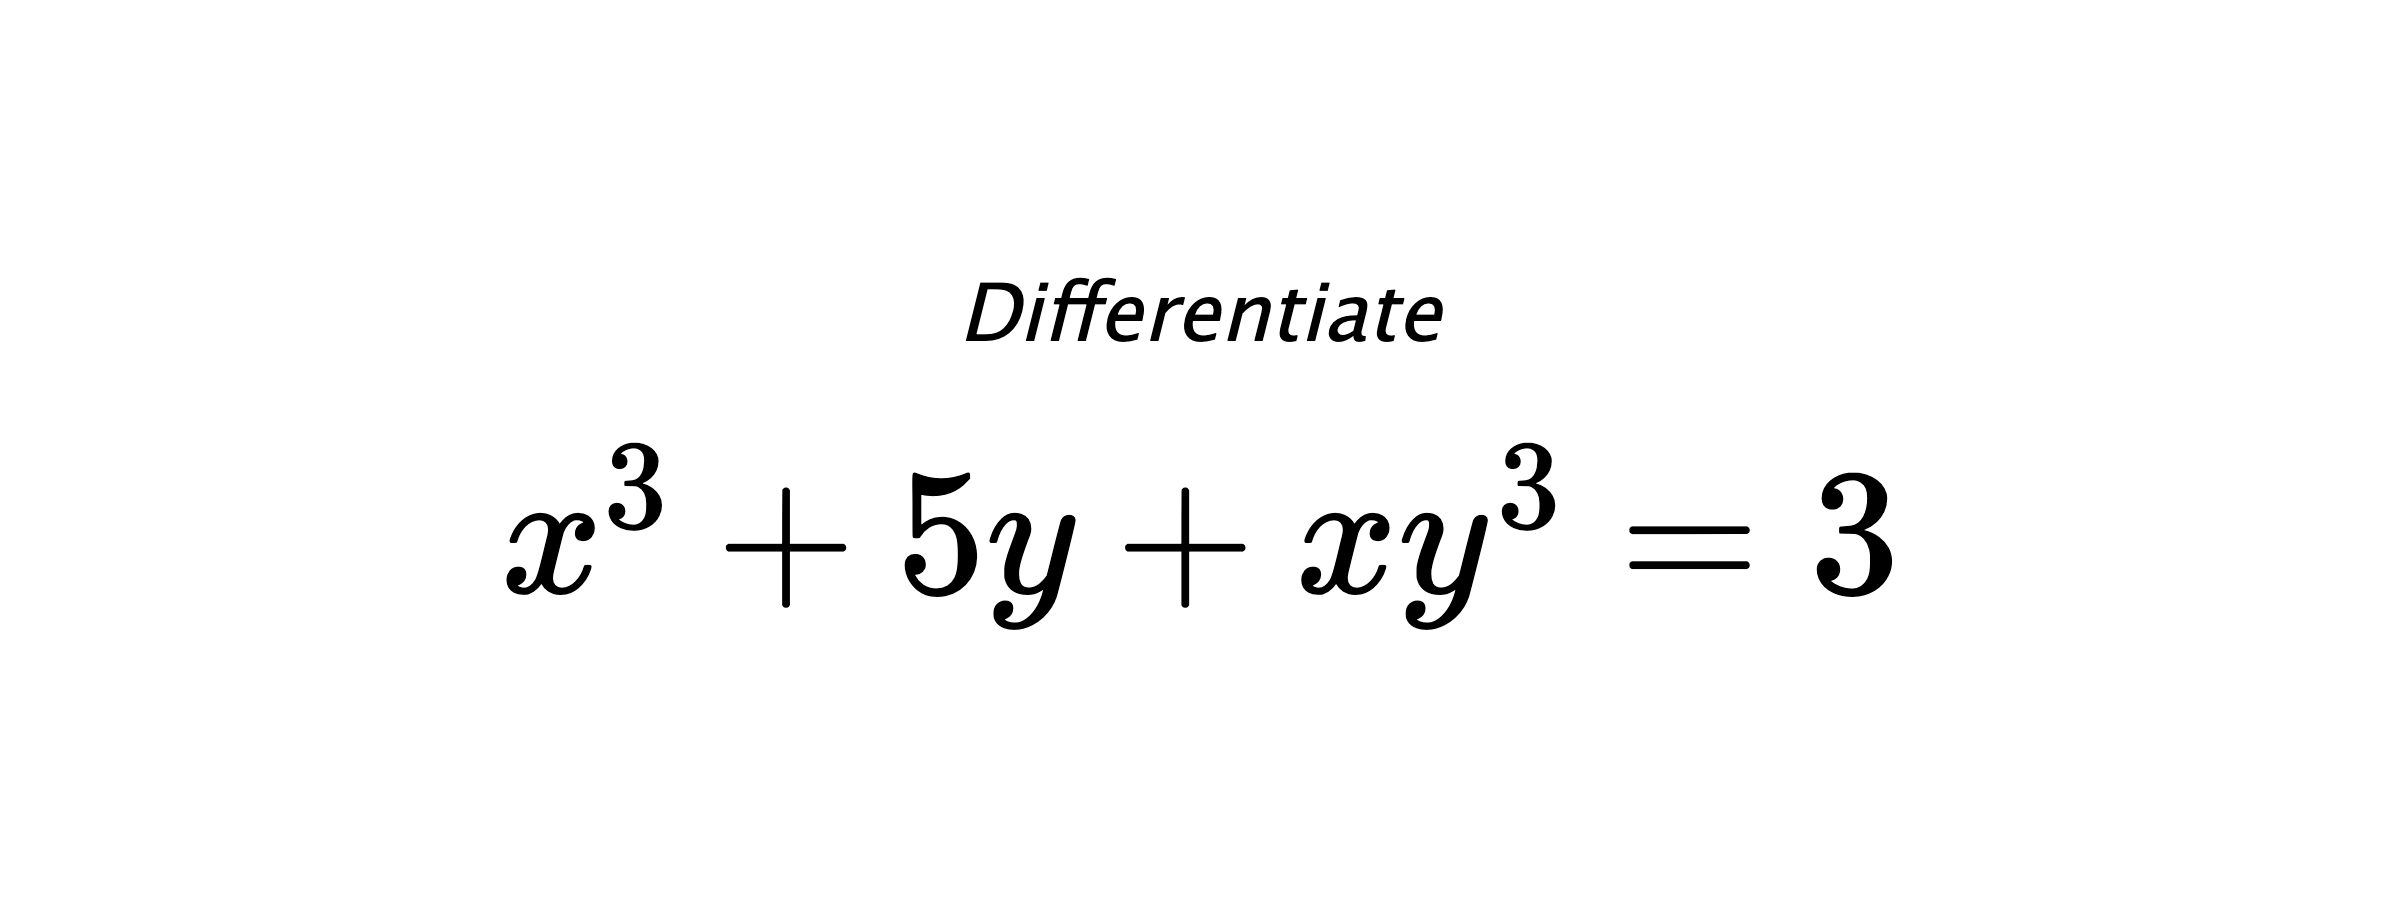 Differentiate $ x^3+5y+xy^3 = 3 $